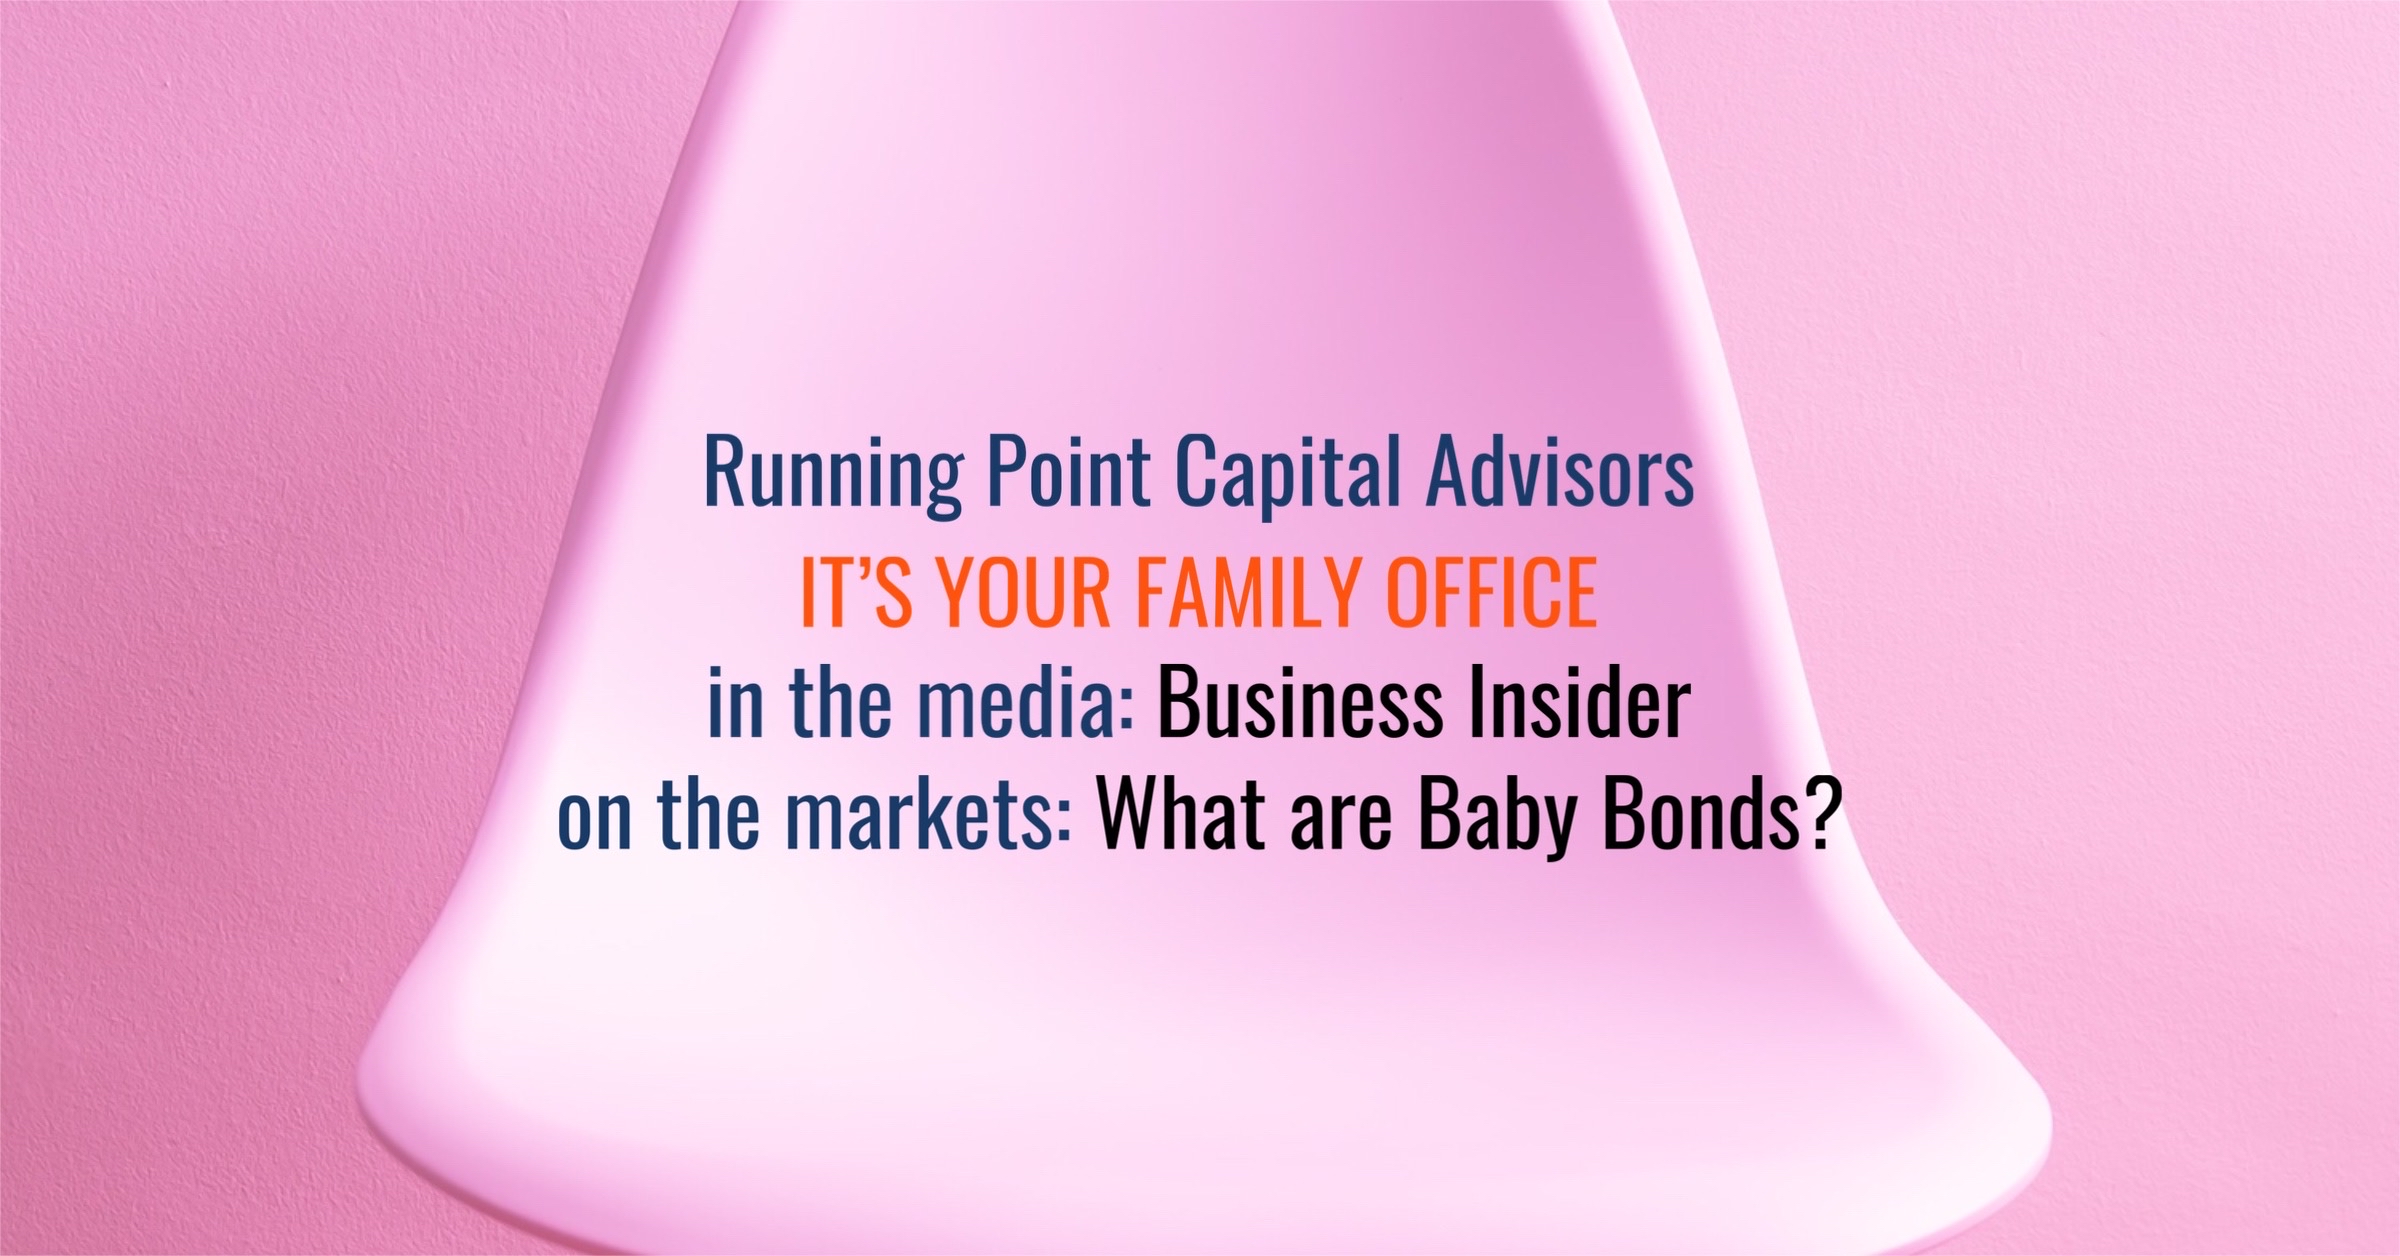 Business Insider: Baby Bonds